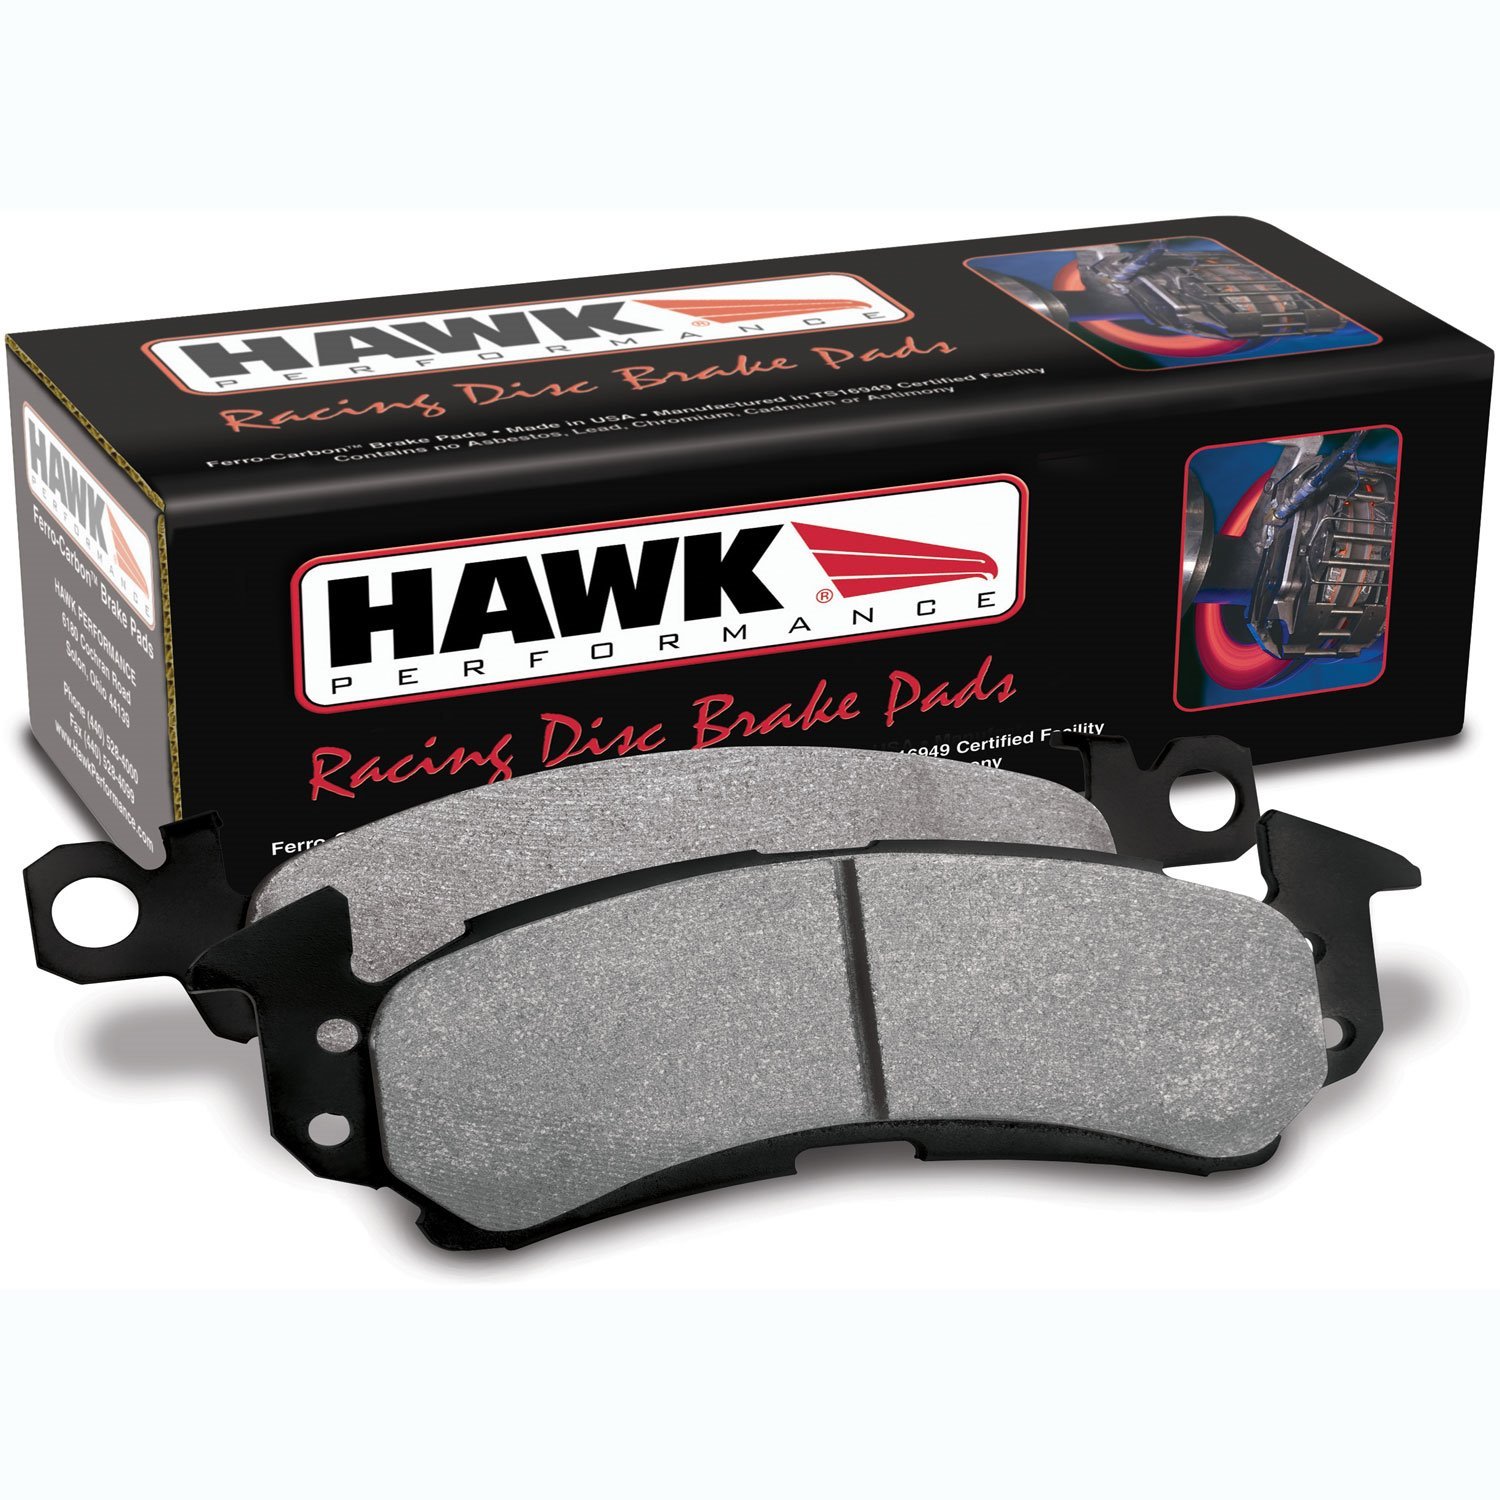 Disc Brake Pad HP Plus w/0.645 Thickness